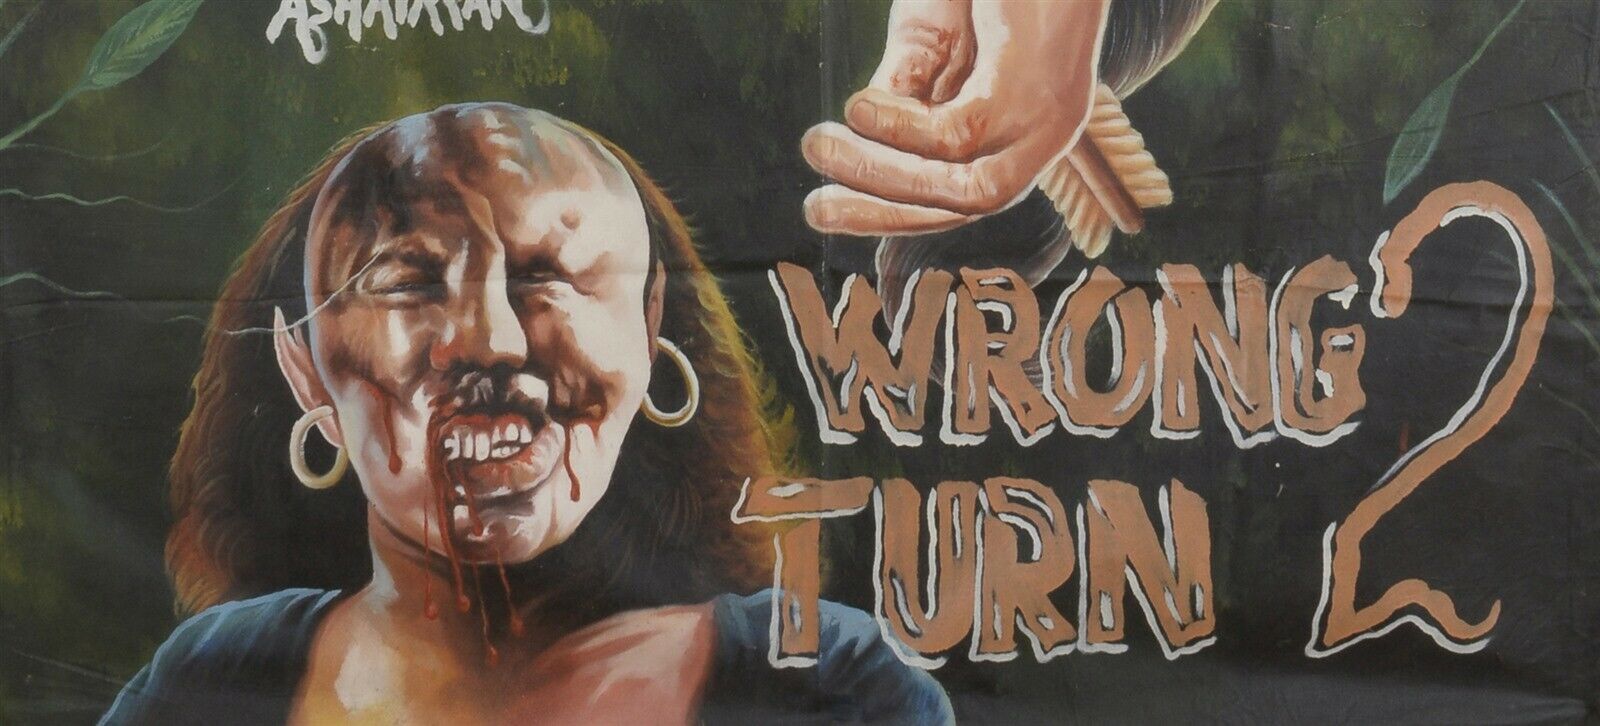 Ghana Movie poster African cinema folk wall hand painted WRONG TURN 2 - Tribalgh